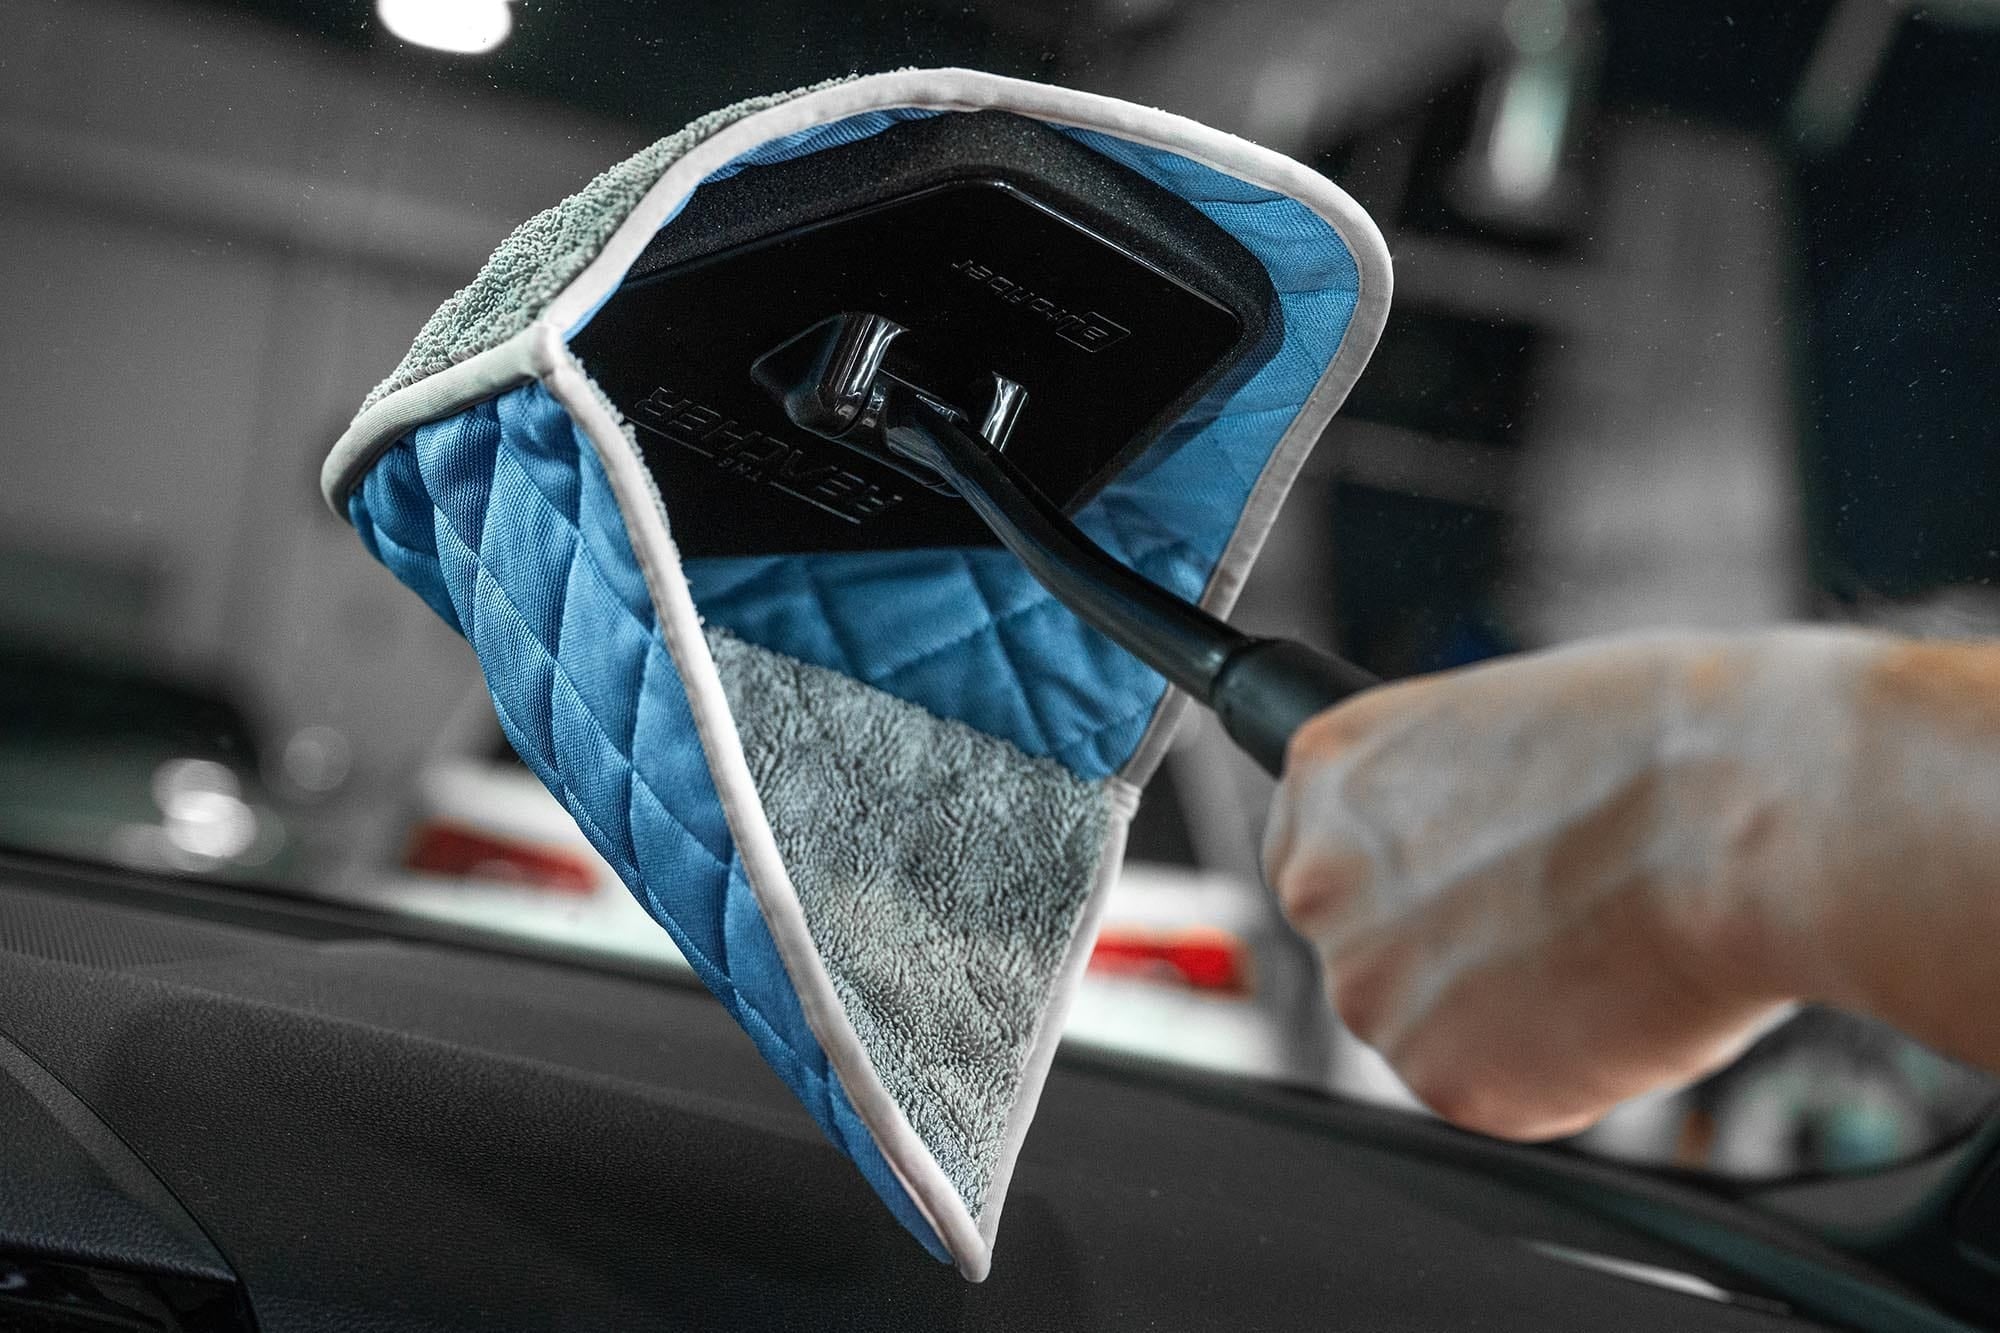 Glass Cleaning Kit (ADG Breeze & 3 Amphibian Mini Towels) — Autofiber